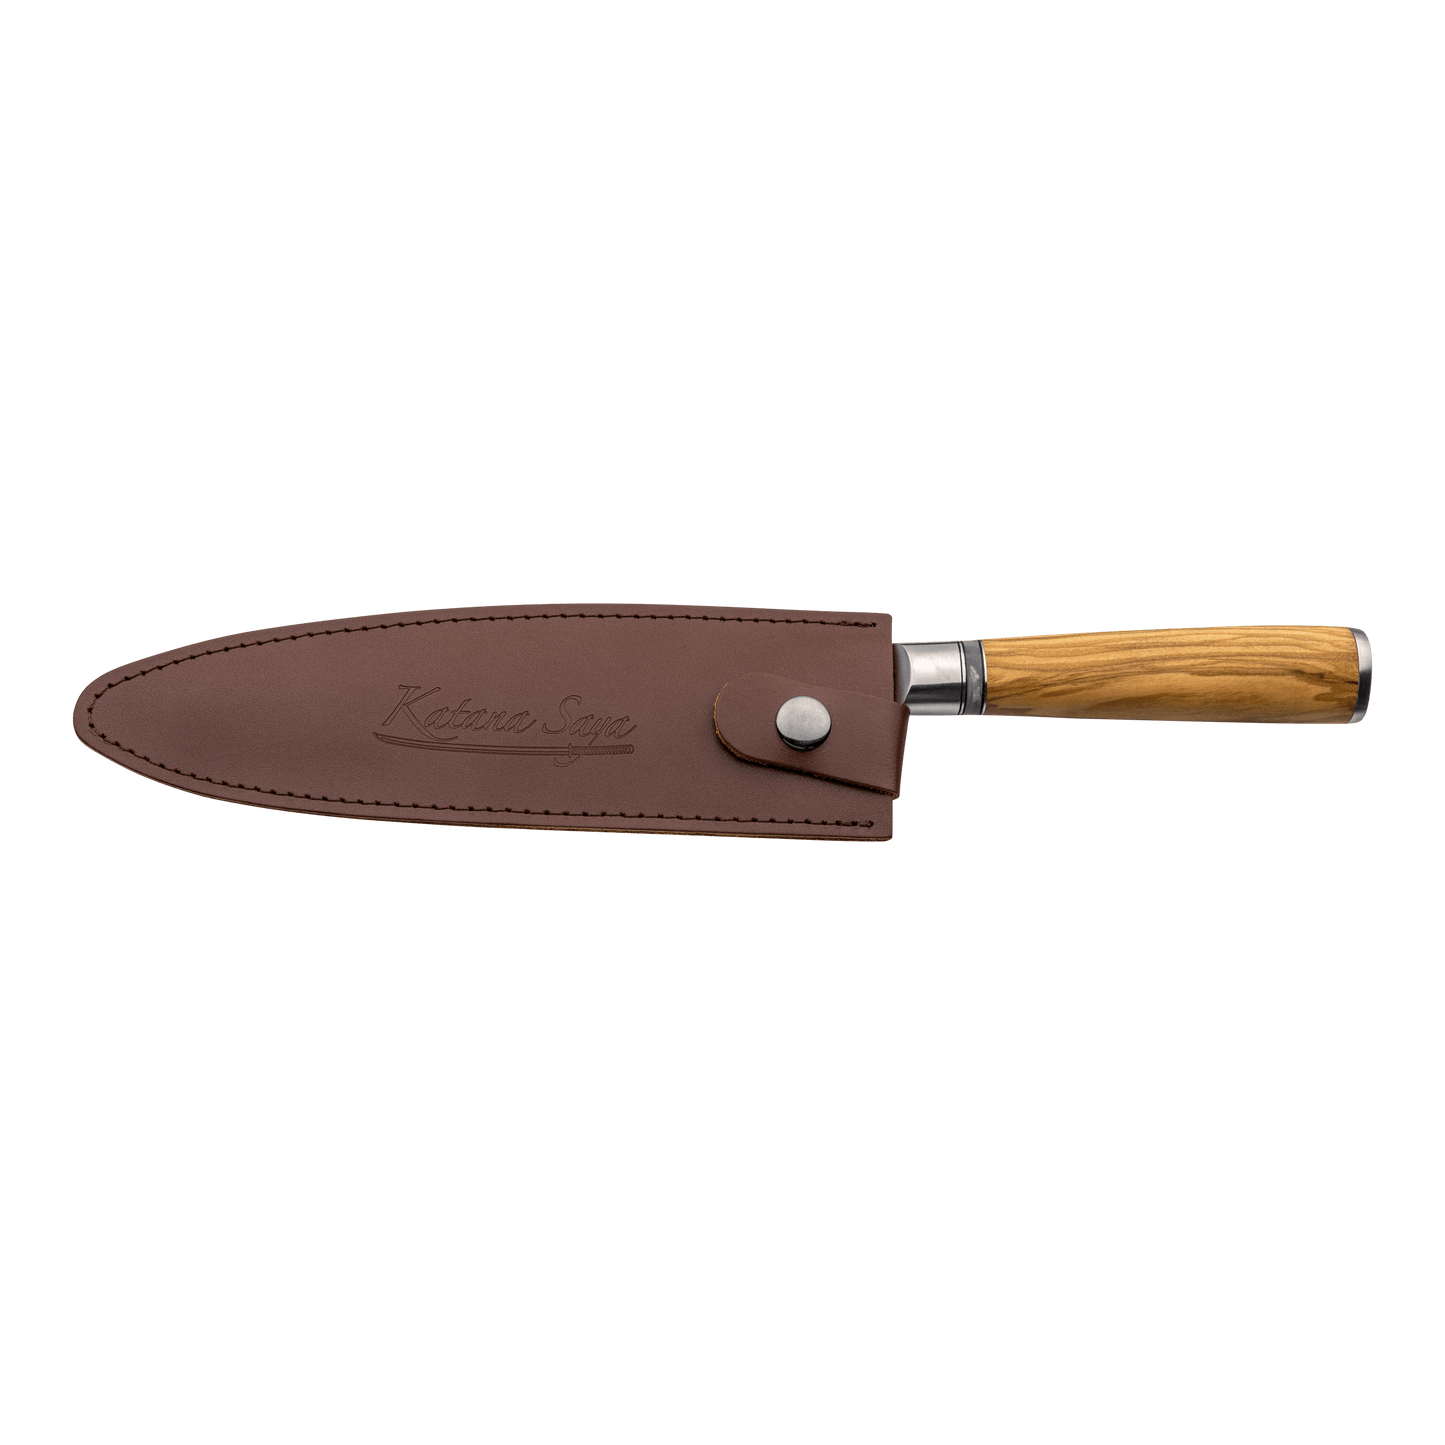 Katana Saya Olive Wood 20cm Bread Knife